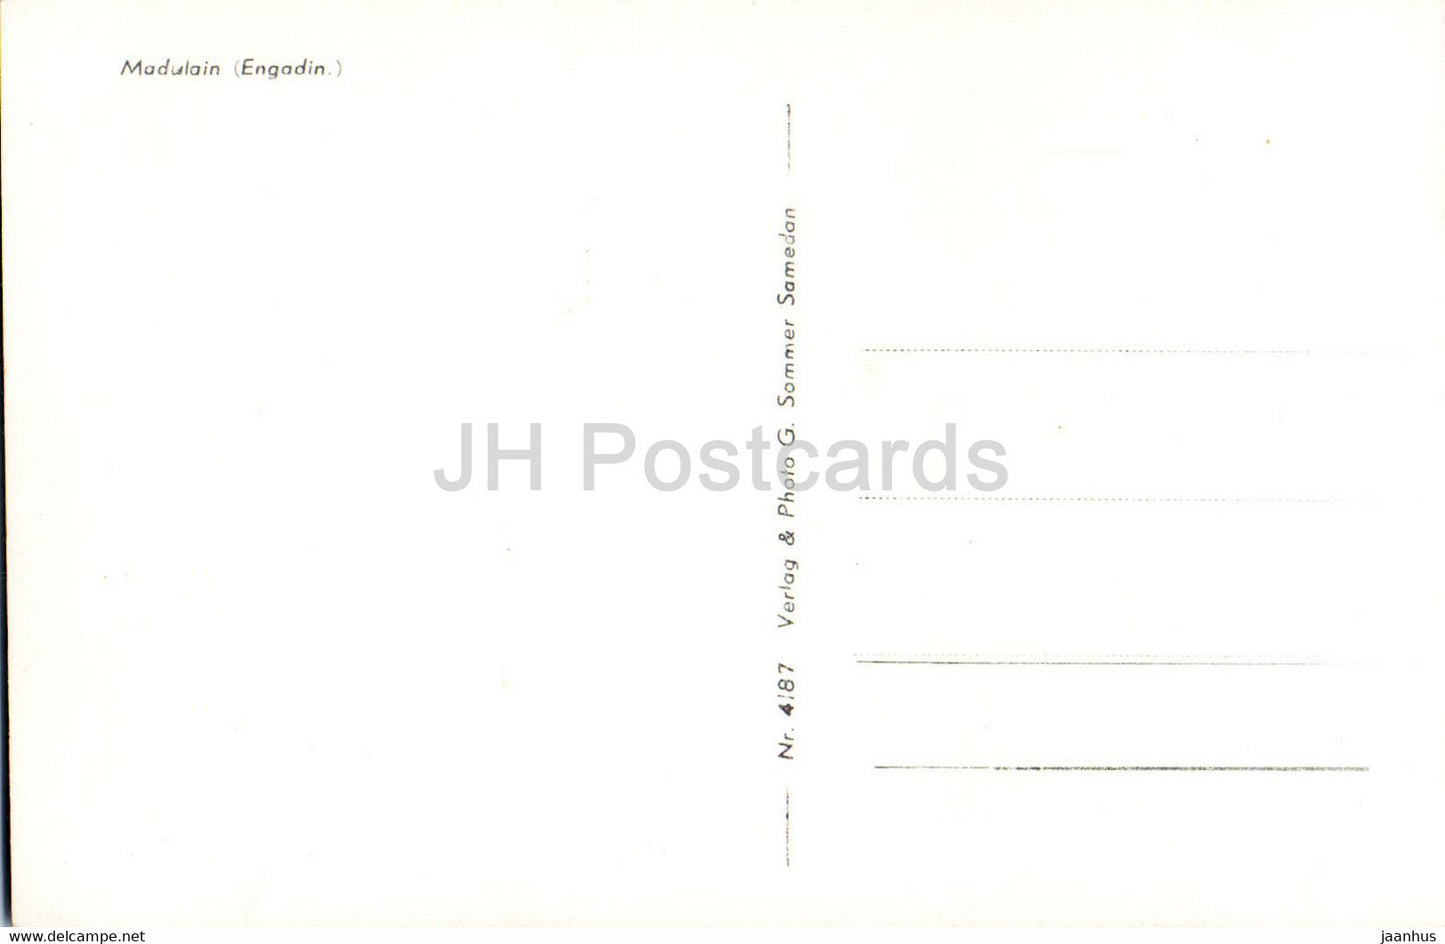 Madulain - Engadin - 4187 - carte postale ancienne - Suisse - inutilisée